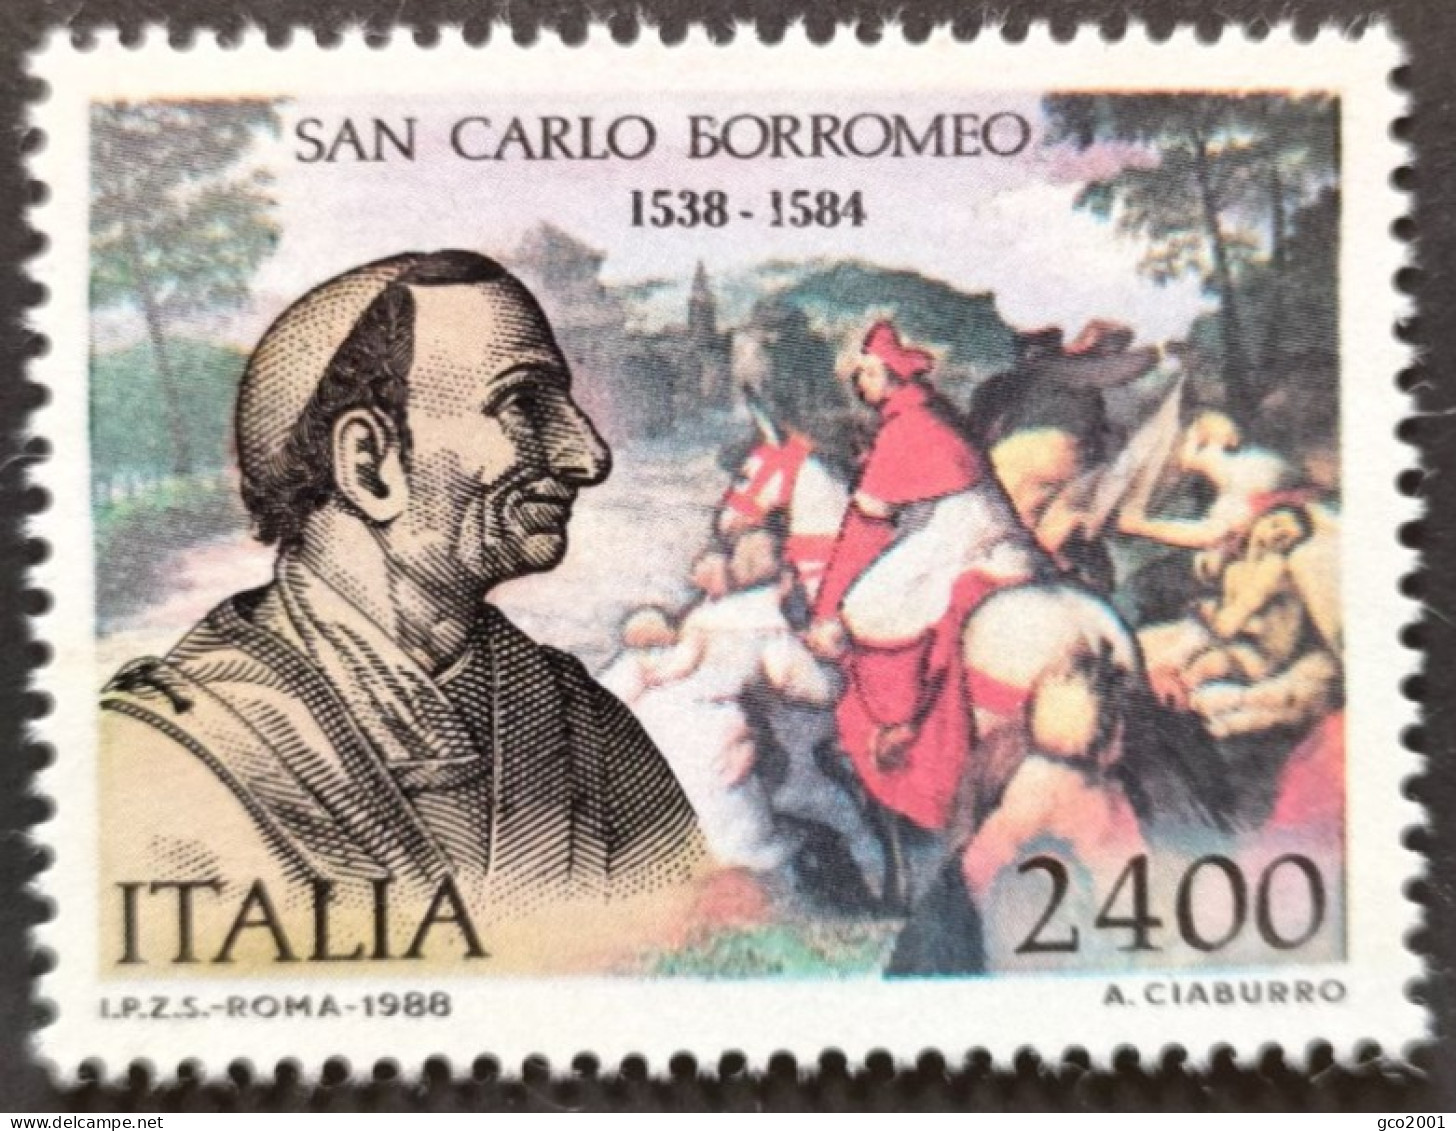 ITALIE / YT 1799 / SAINT CHARLES BORROMEE - RELIGION - HISTOIRE / NEUF ** / MNH - 1981-90: Mint/hinged